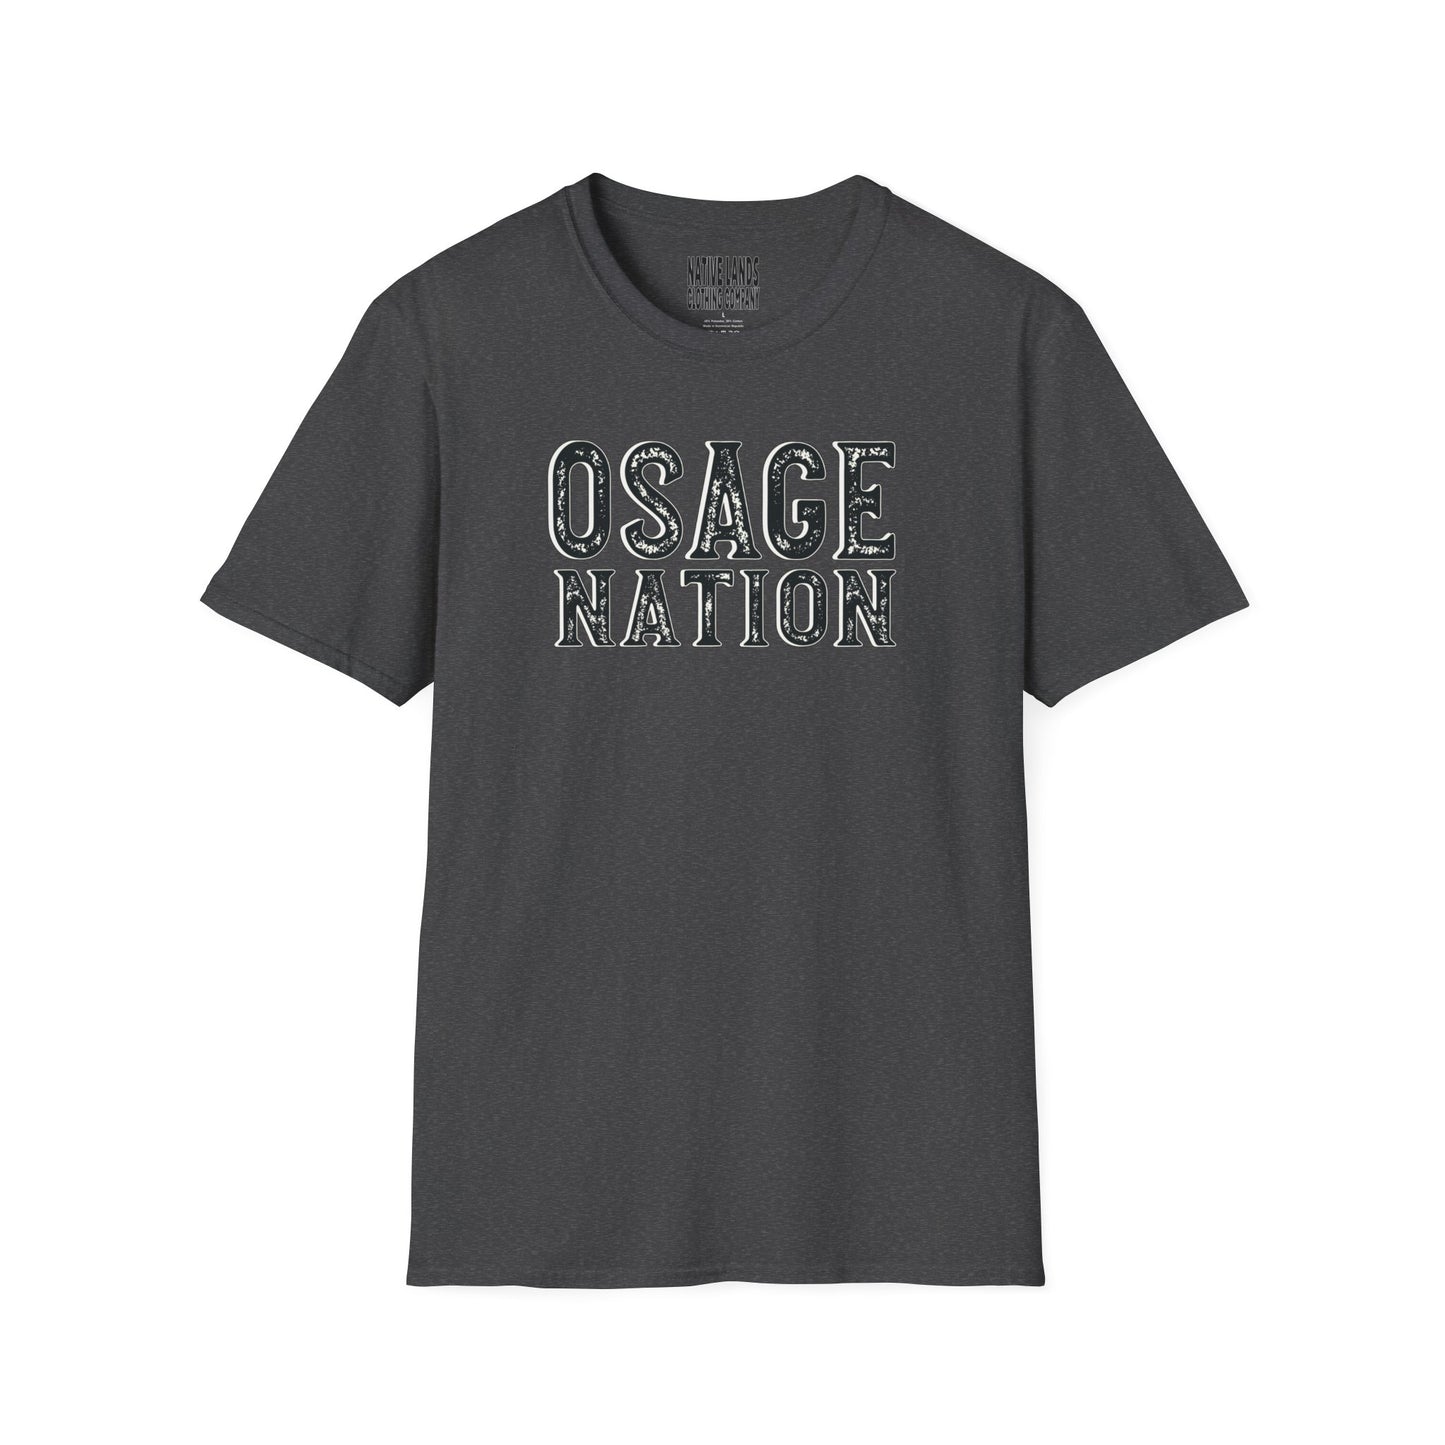 Osage Nation Camisa Algodón Nativo Americano